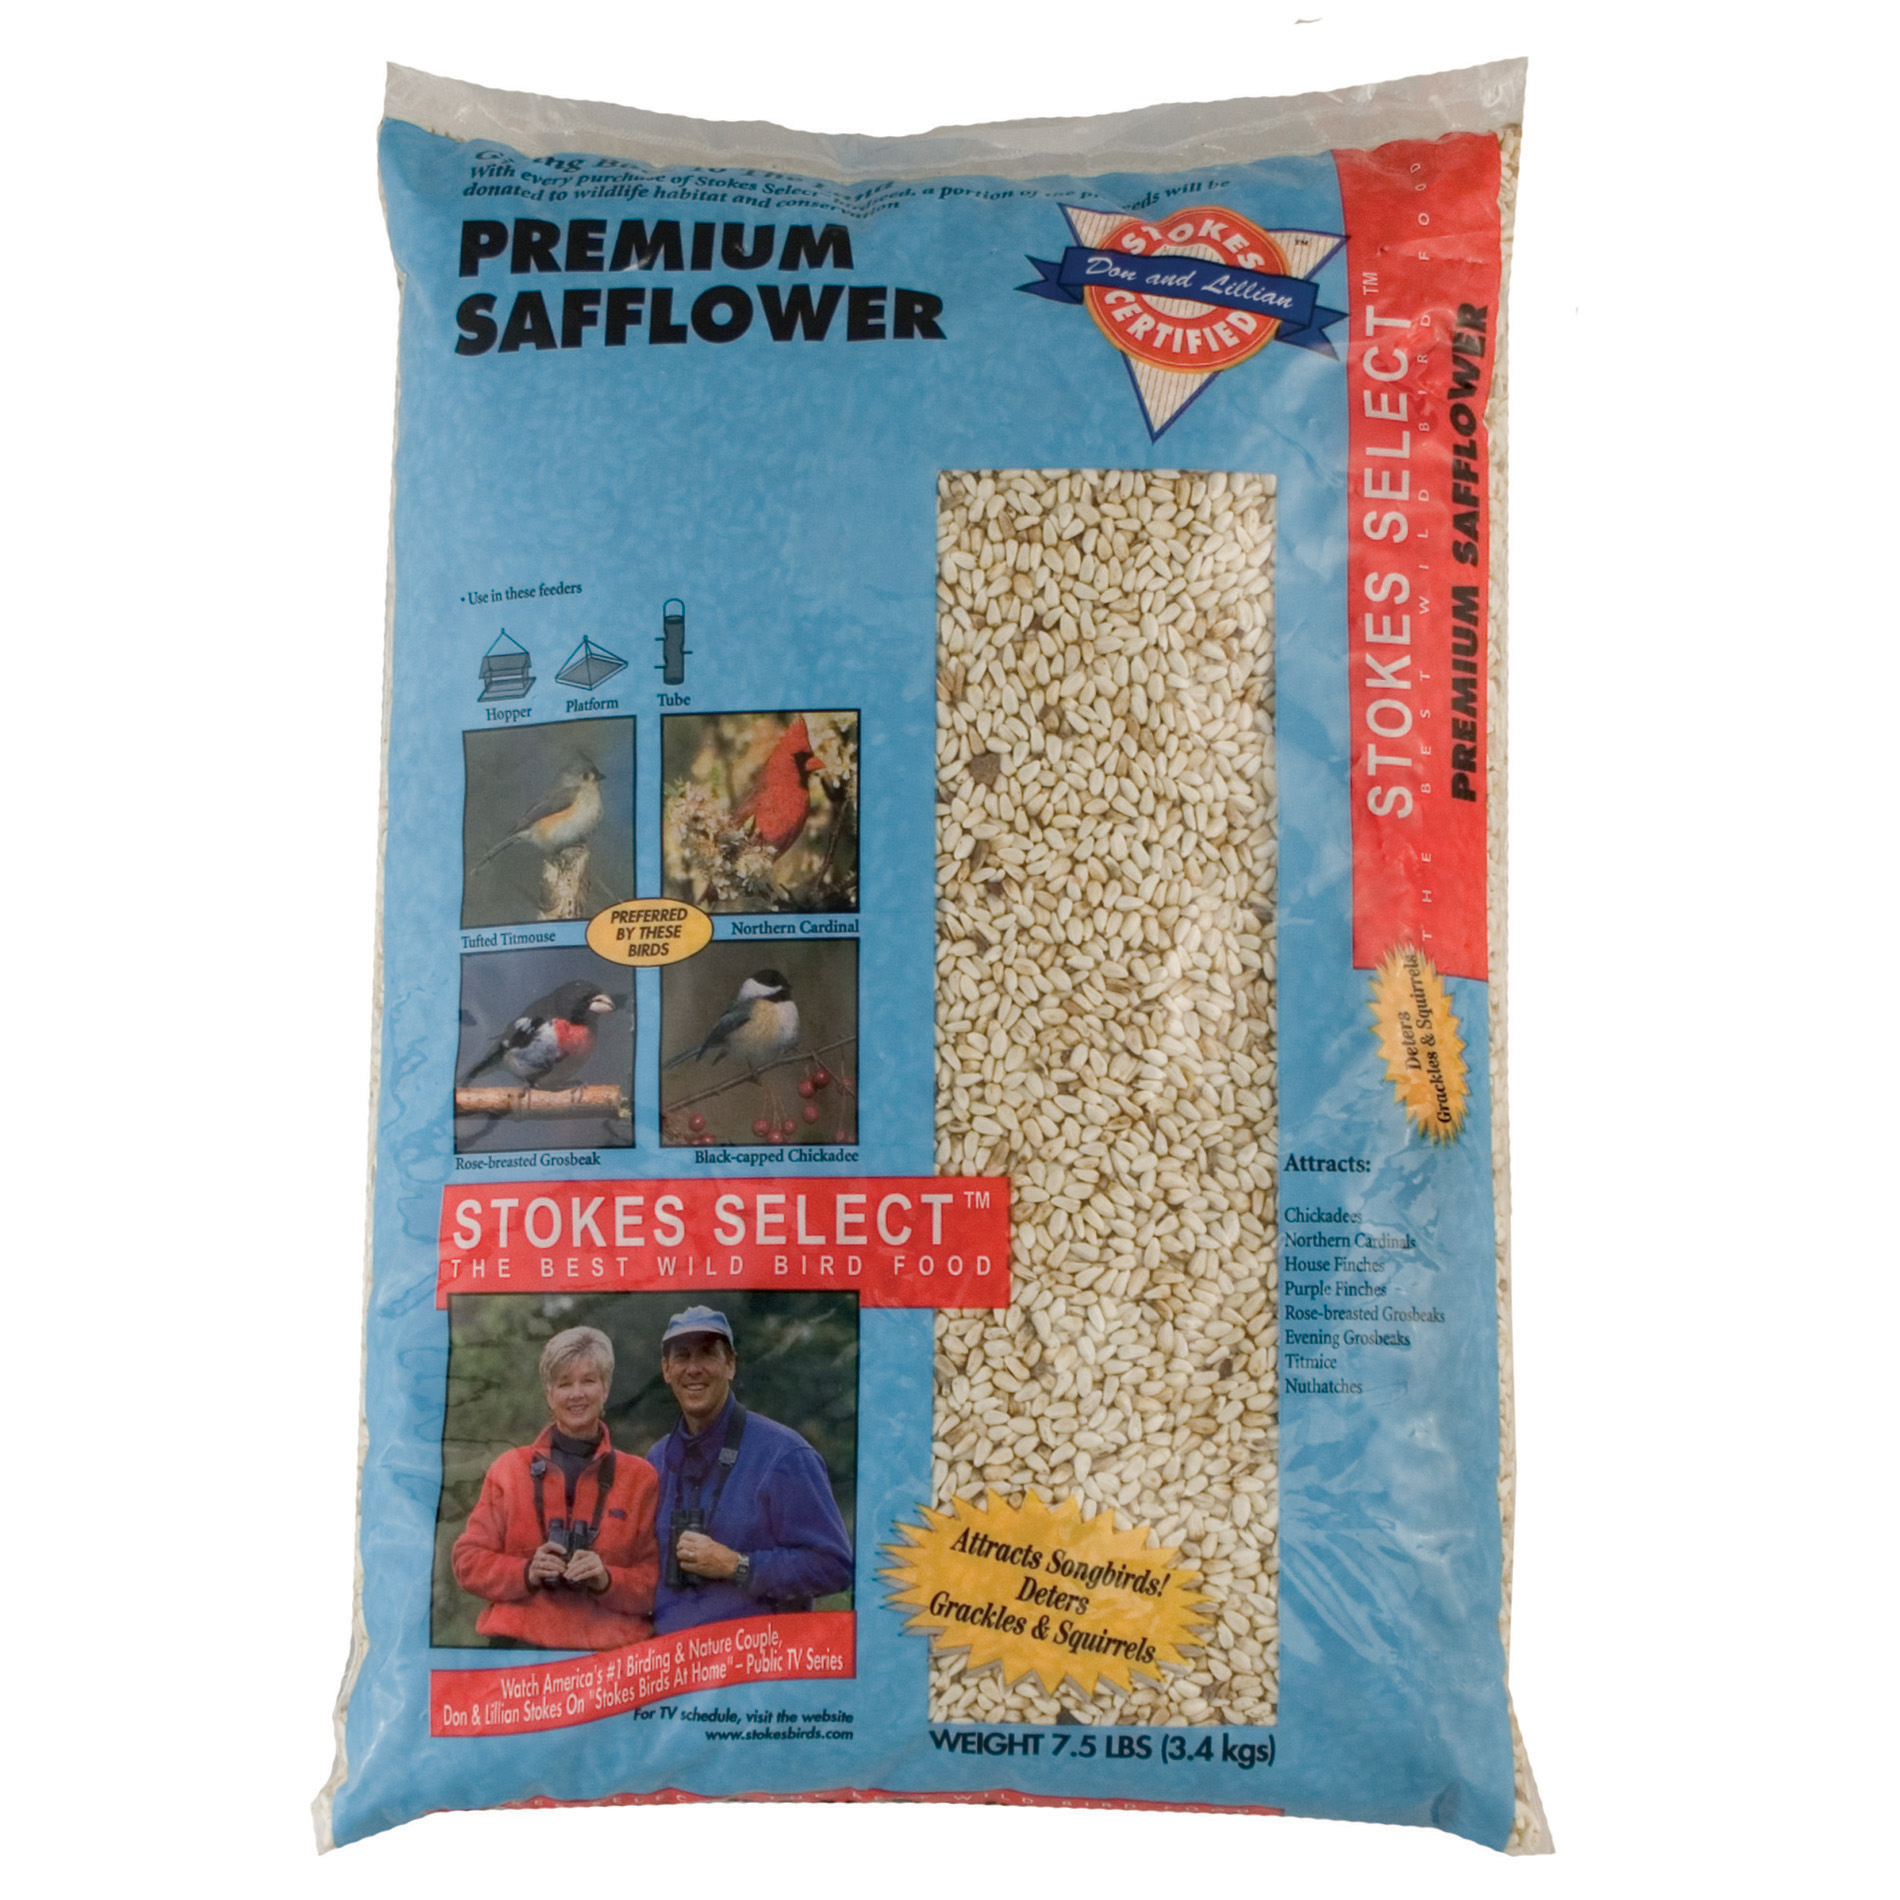 Stokes Select 7.5 lbs. Premium Safflower Bird Food